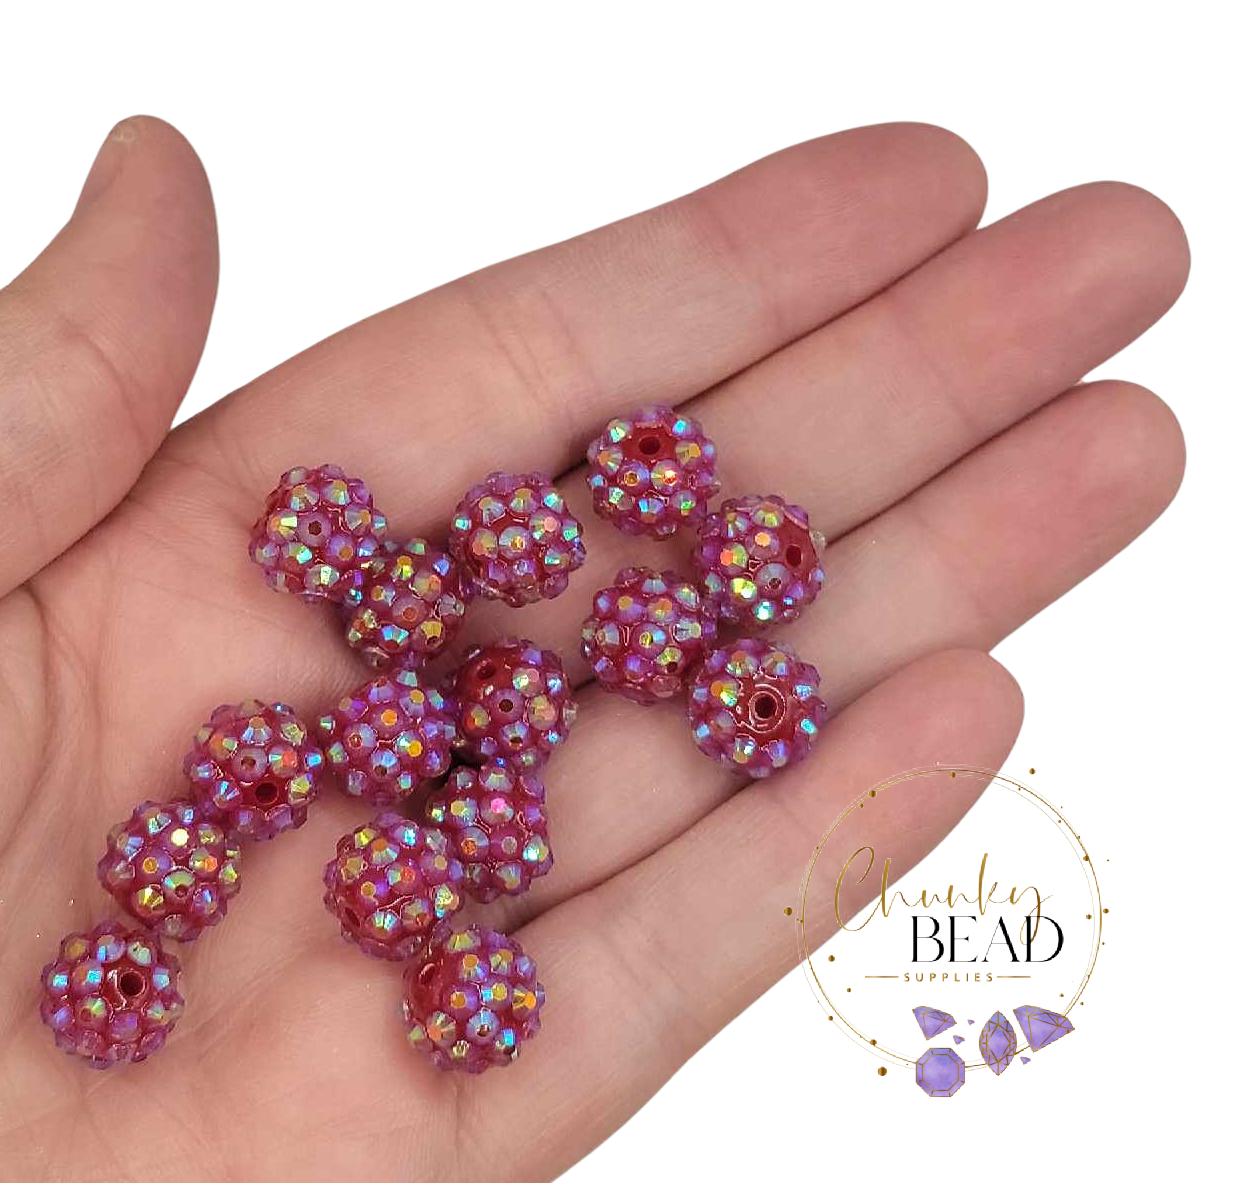 12mm "Mulberry" Neon Rhinestone Acrylic Beads